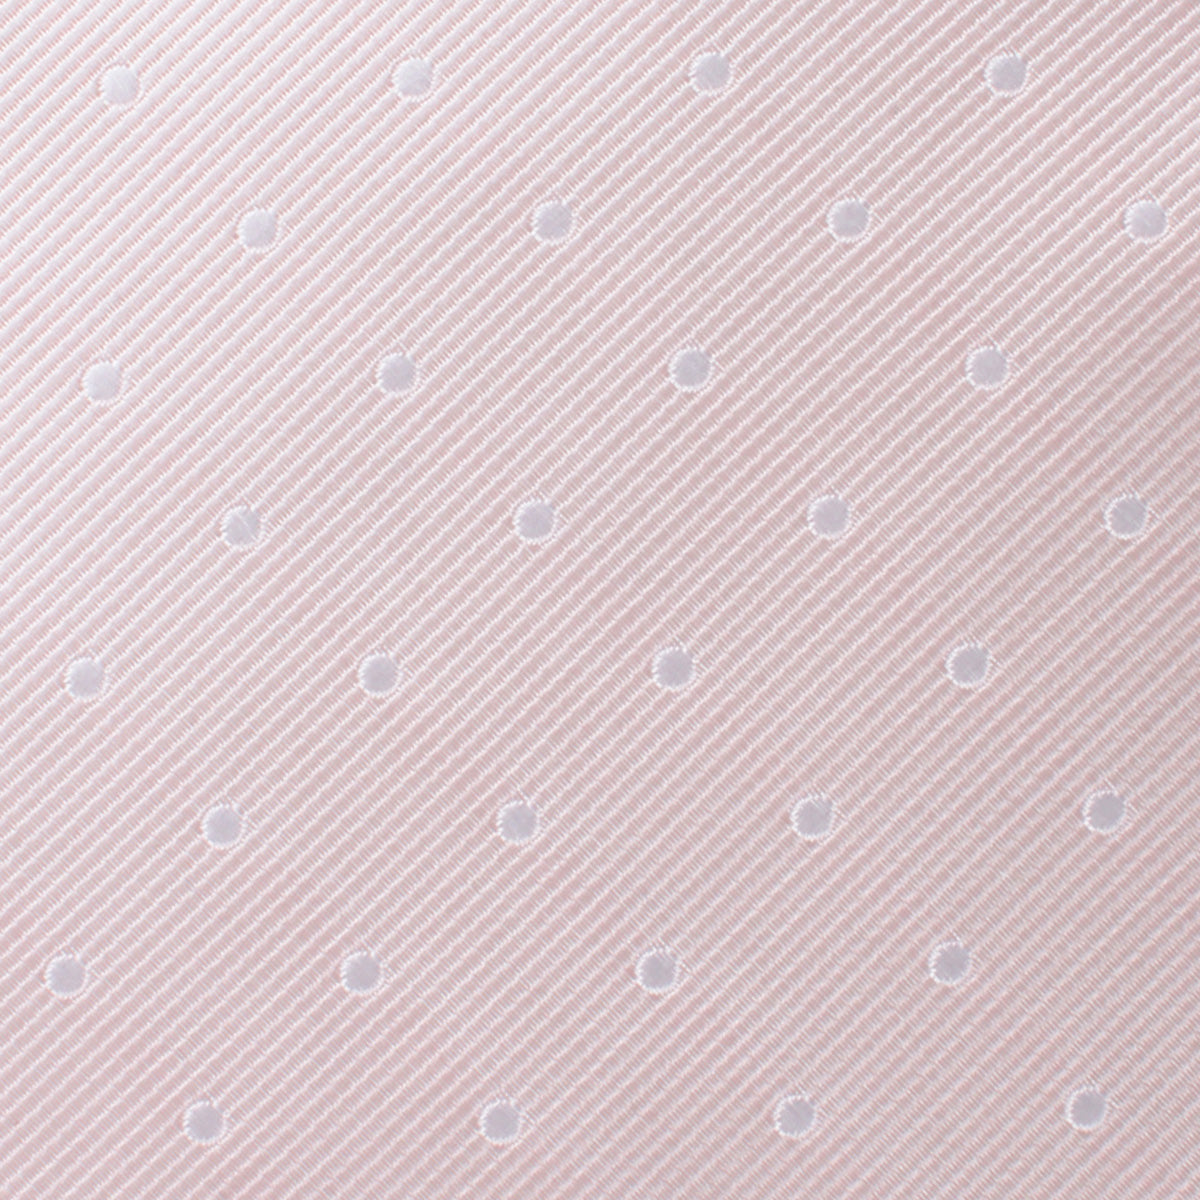 Nude Pink Polka Dots Pocket Square Fabric